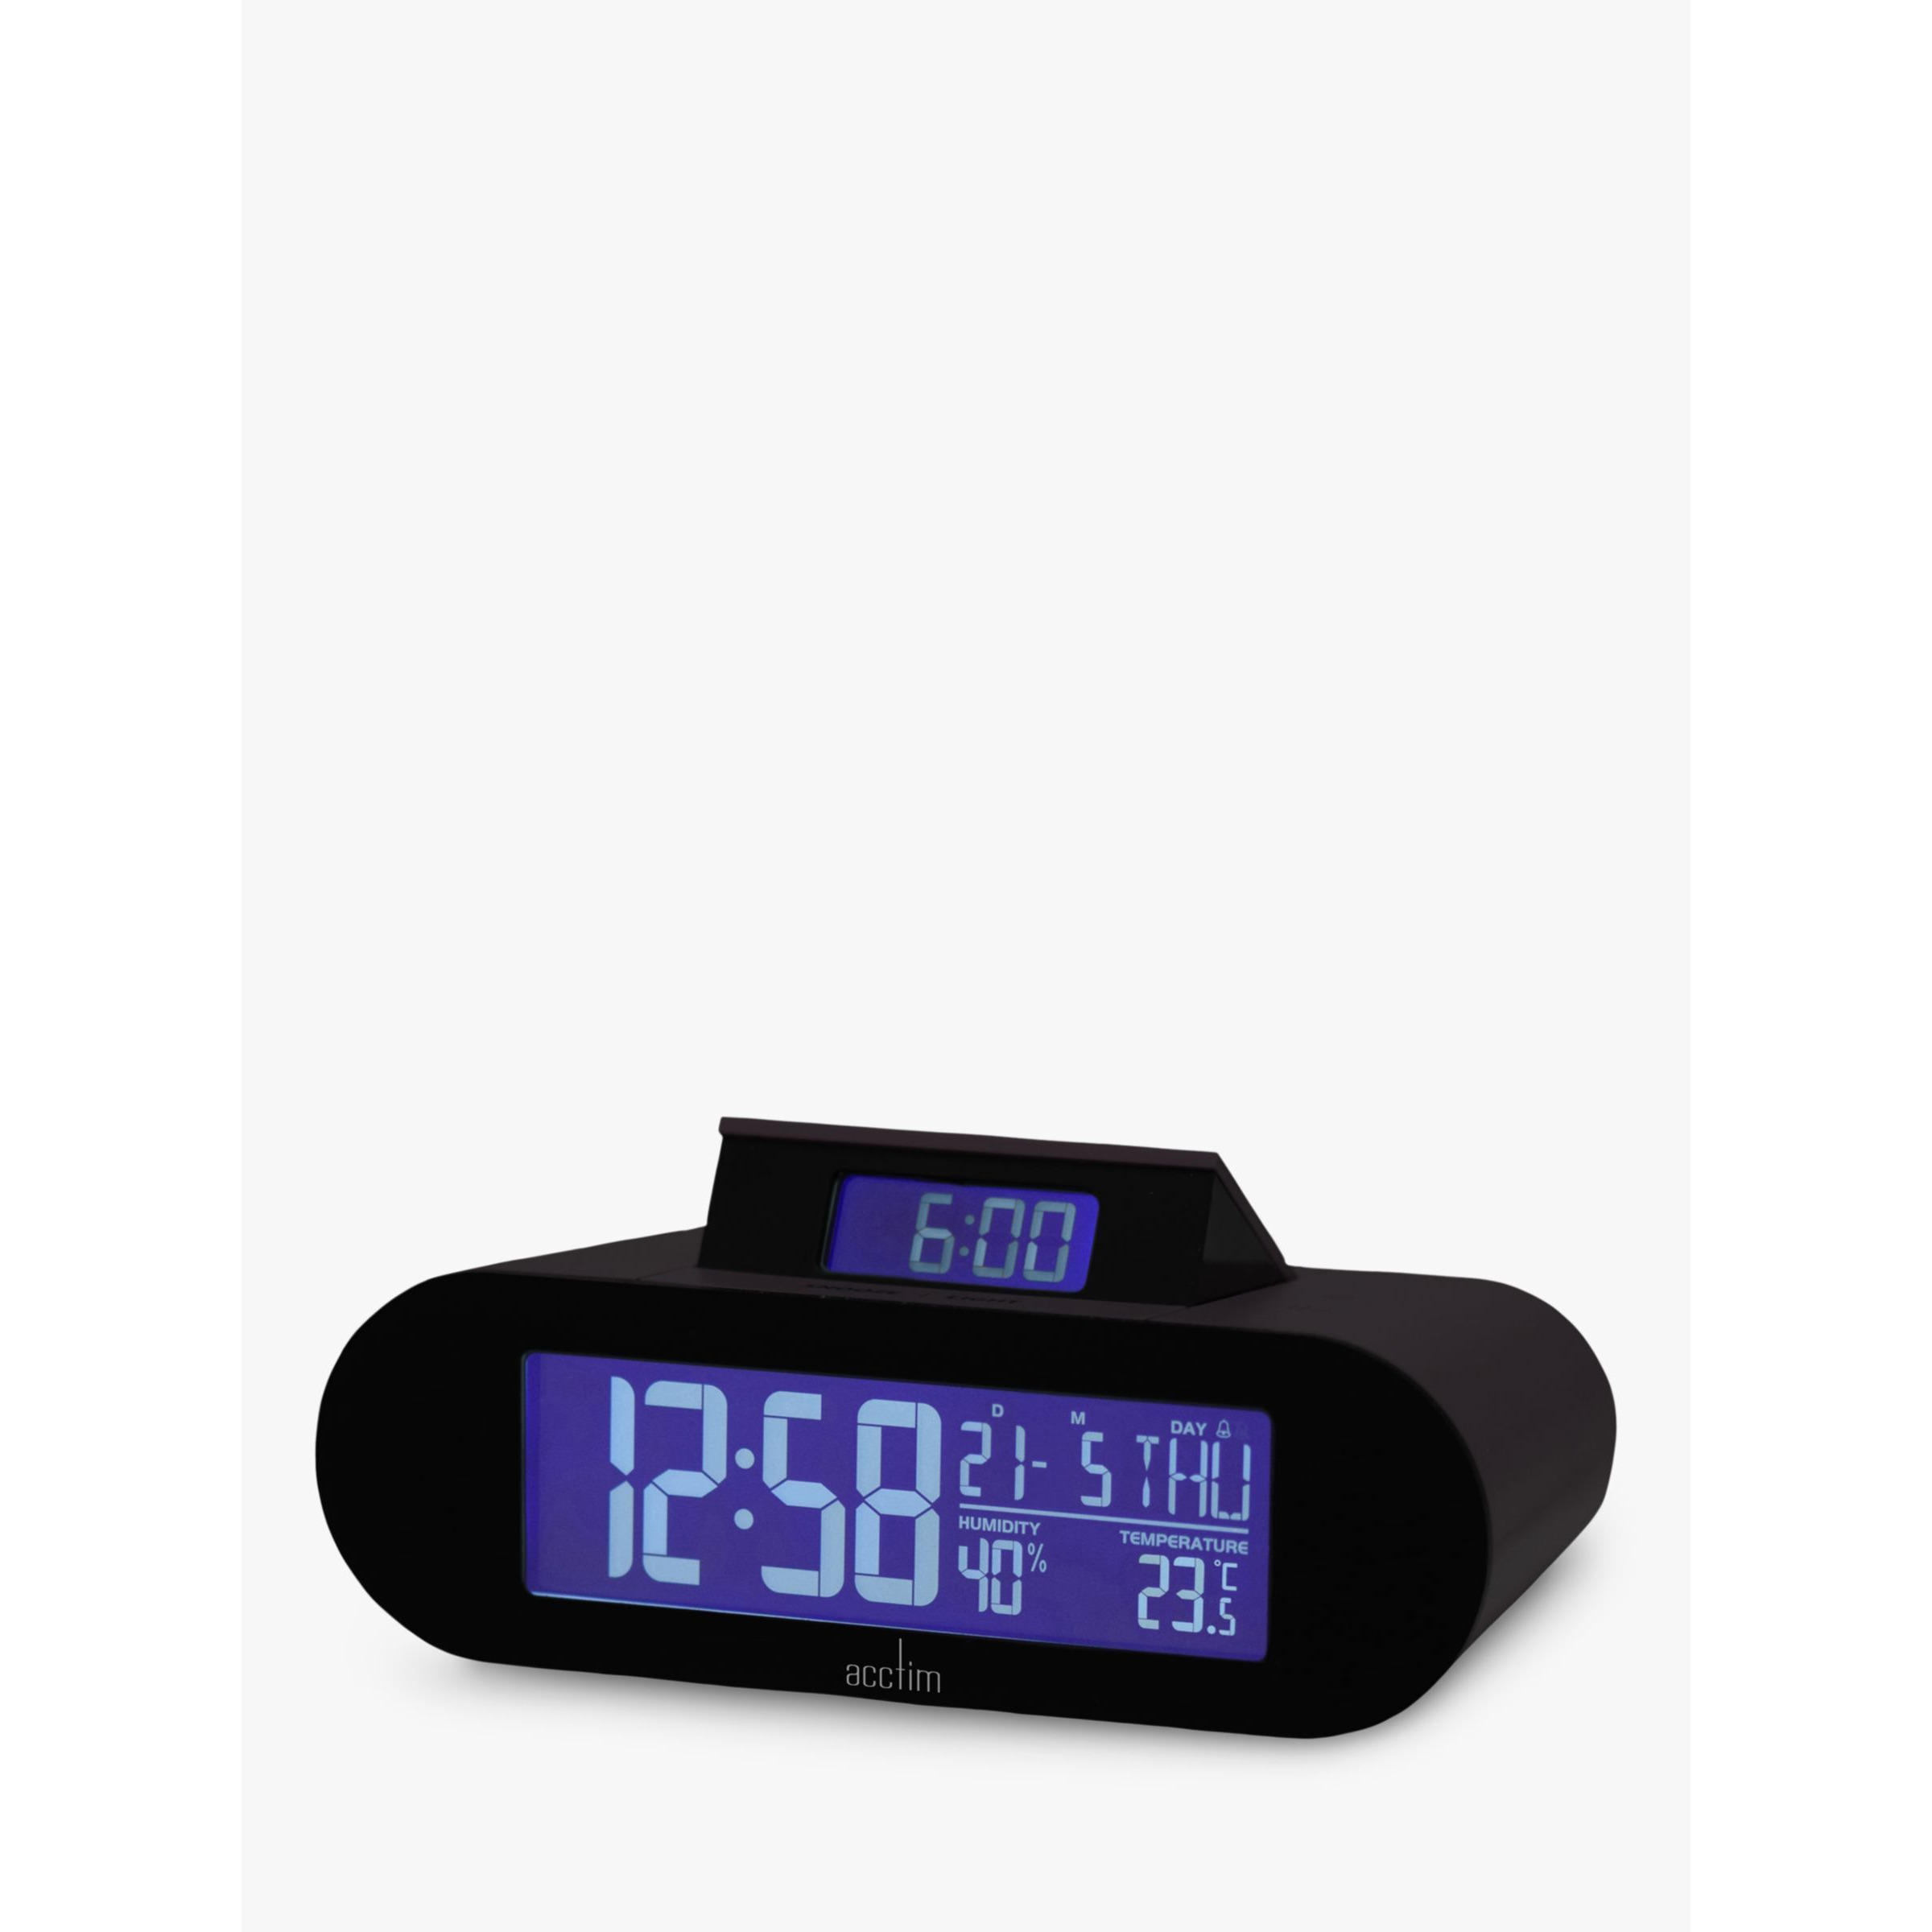 Acctim Kian Pop Up LCD Digital Alarm Clock, 15cm - image 1